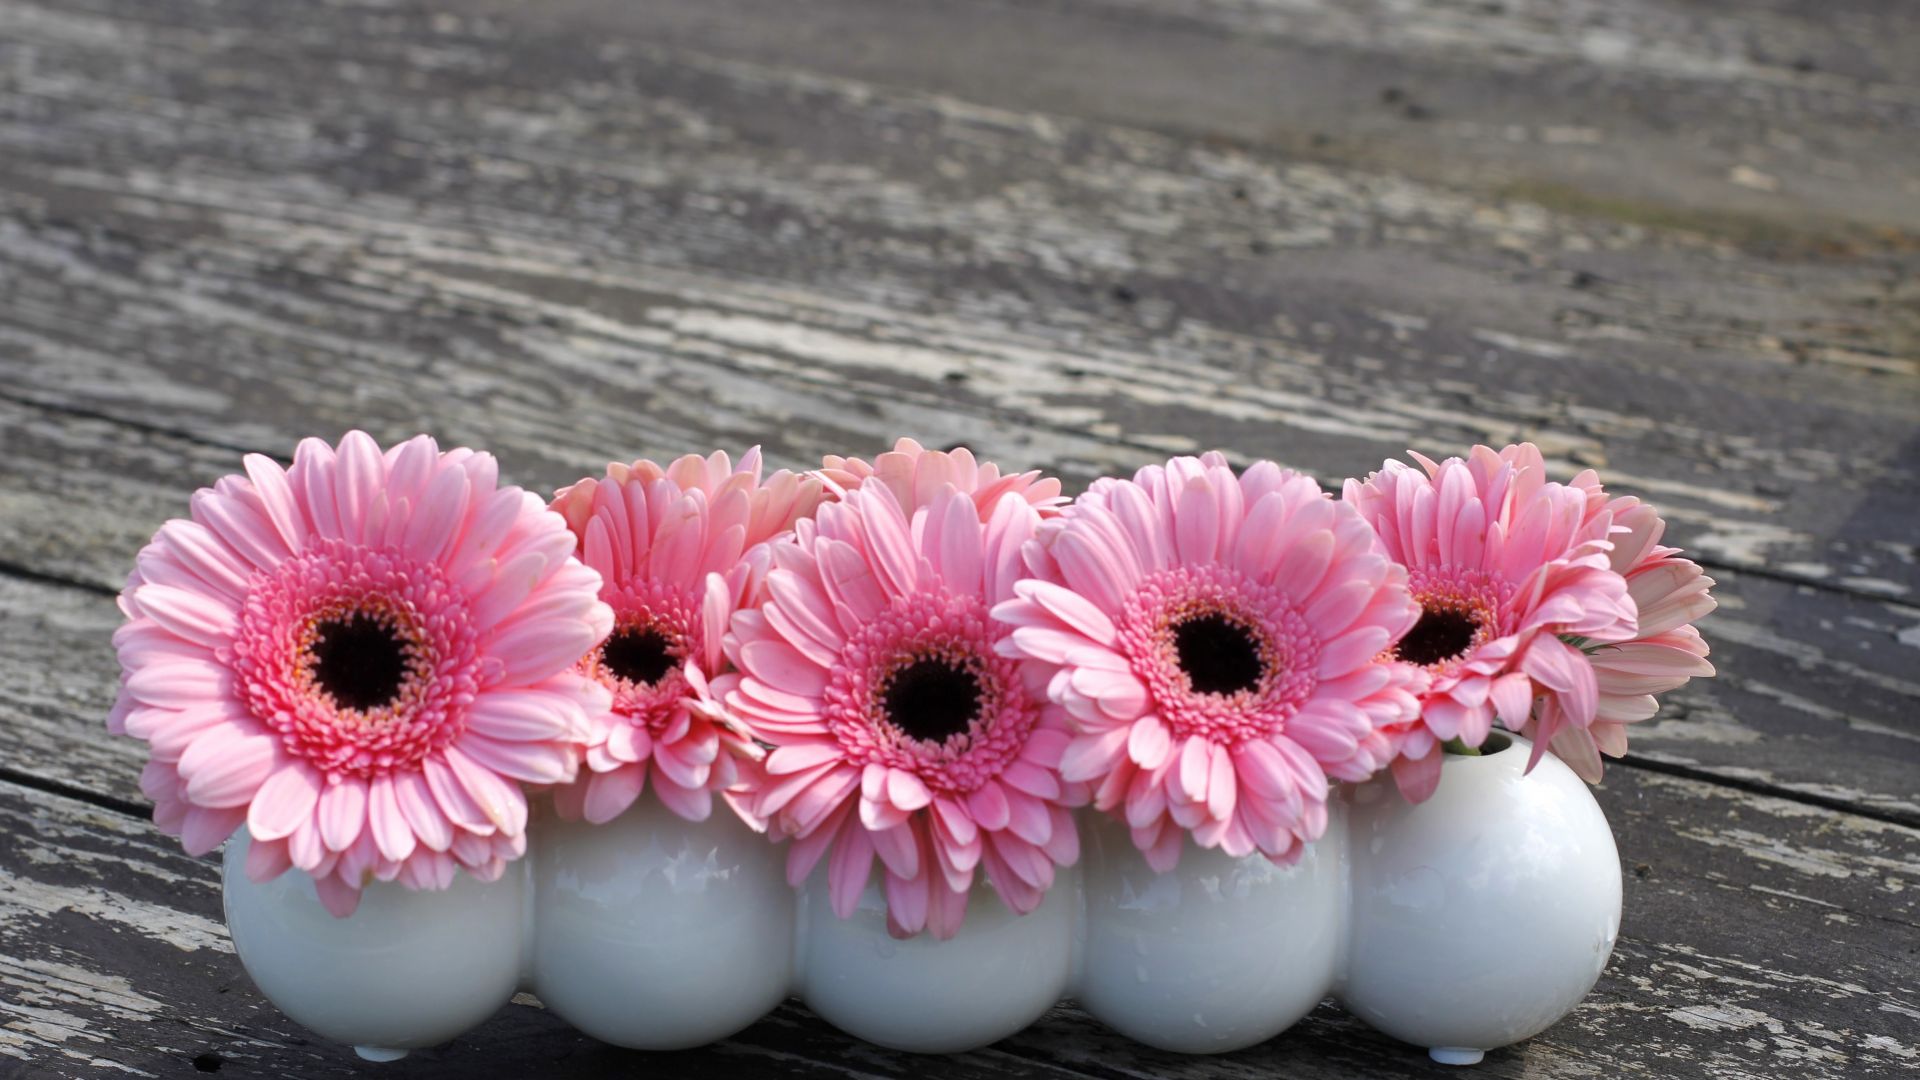 Wallpaper Pink daisy, flowers, glass vases